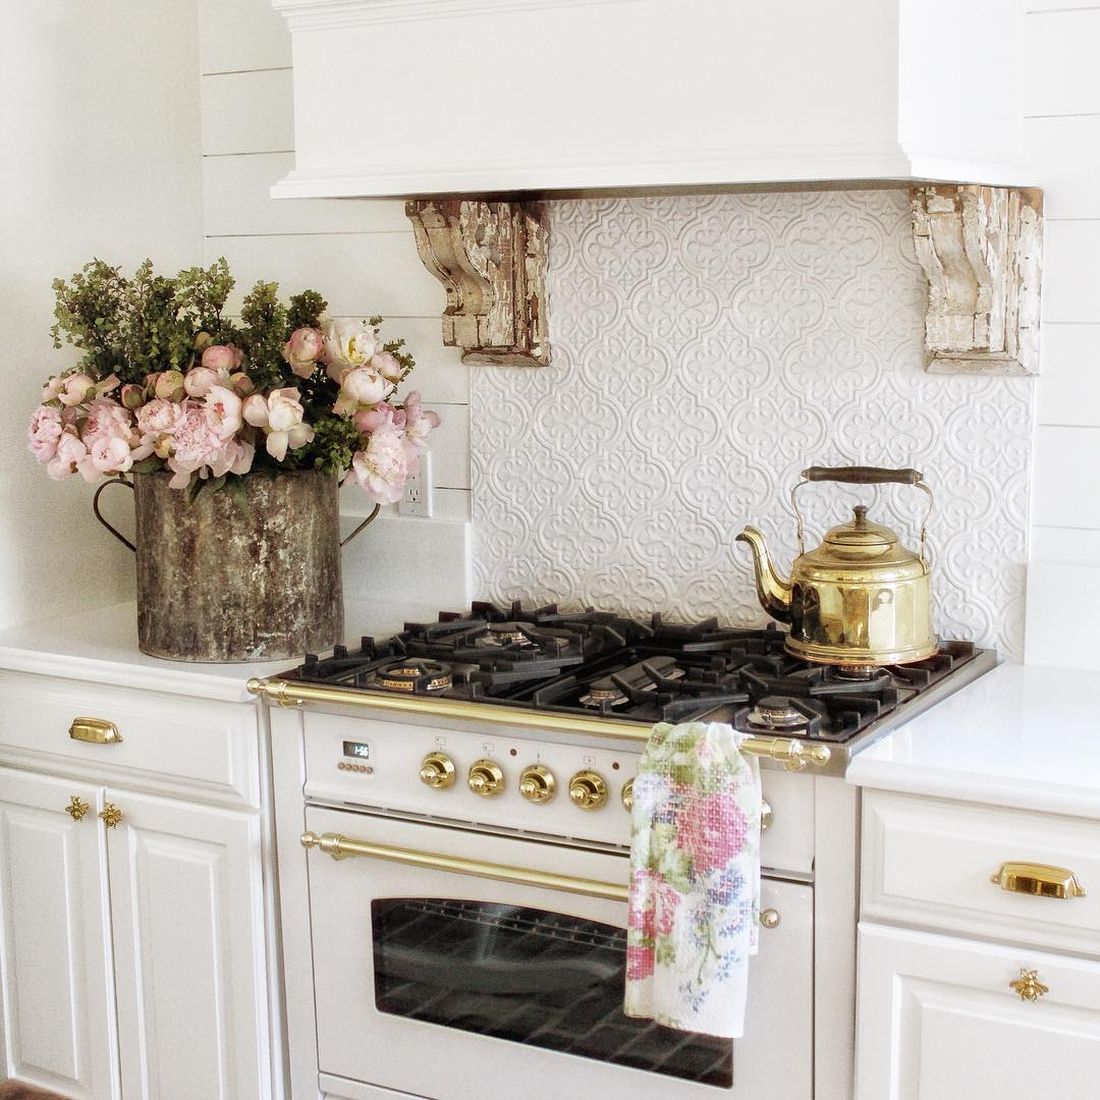 French Country Kitchen with Fleur de Lis Backsplash Tile via @simplyfrenchmarket